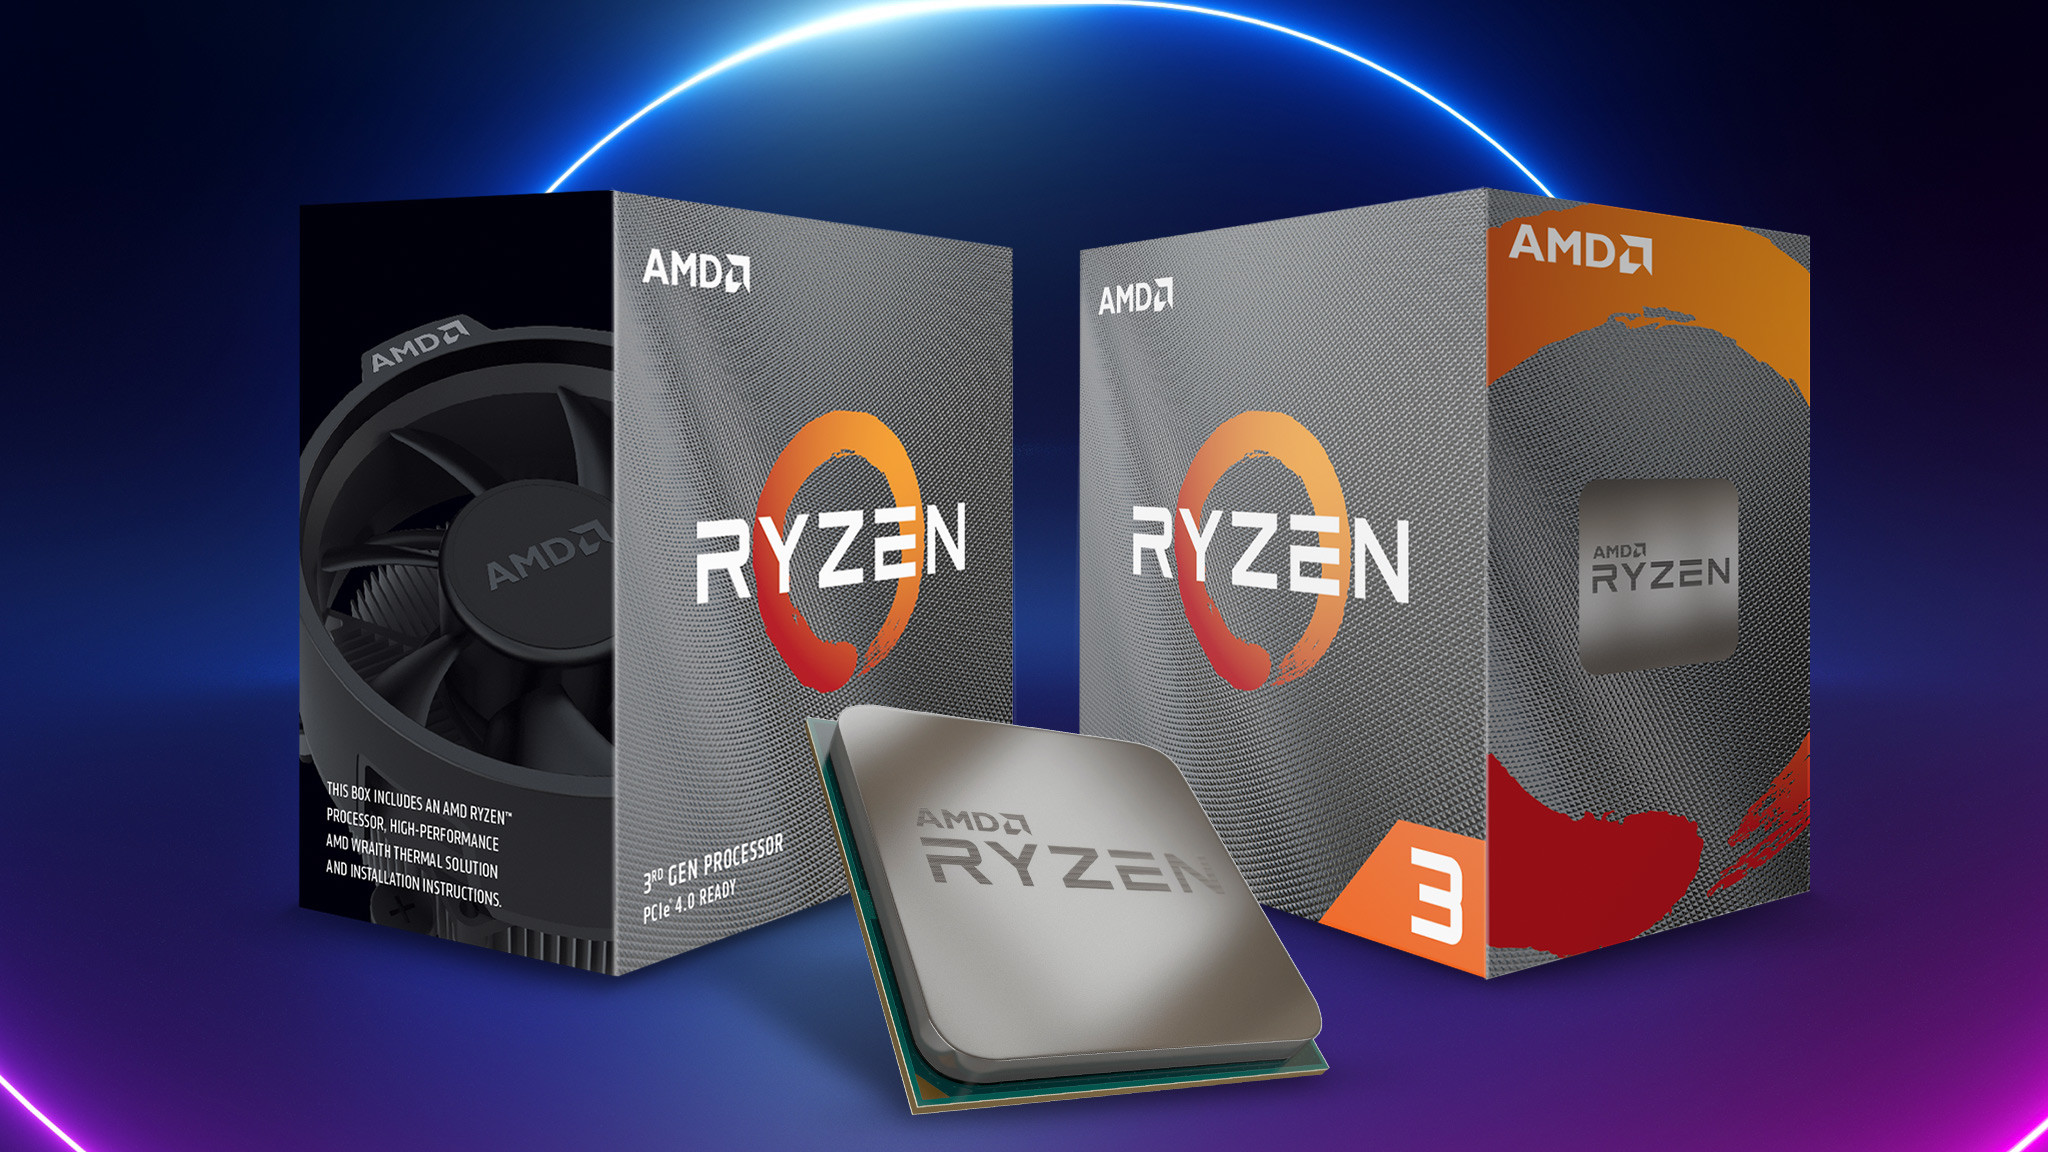 AMD Ryzen 3 3300X: معالج ألعاب بأسعار معقولة في إسرائيل